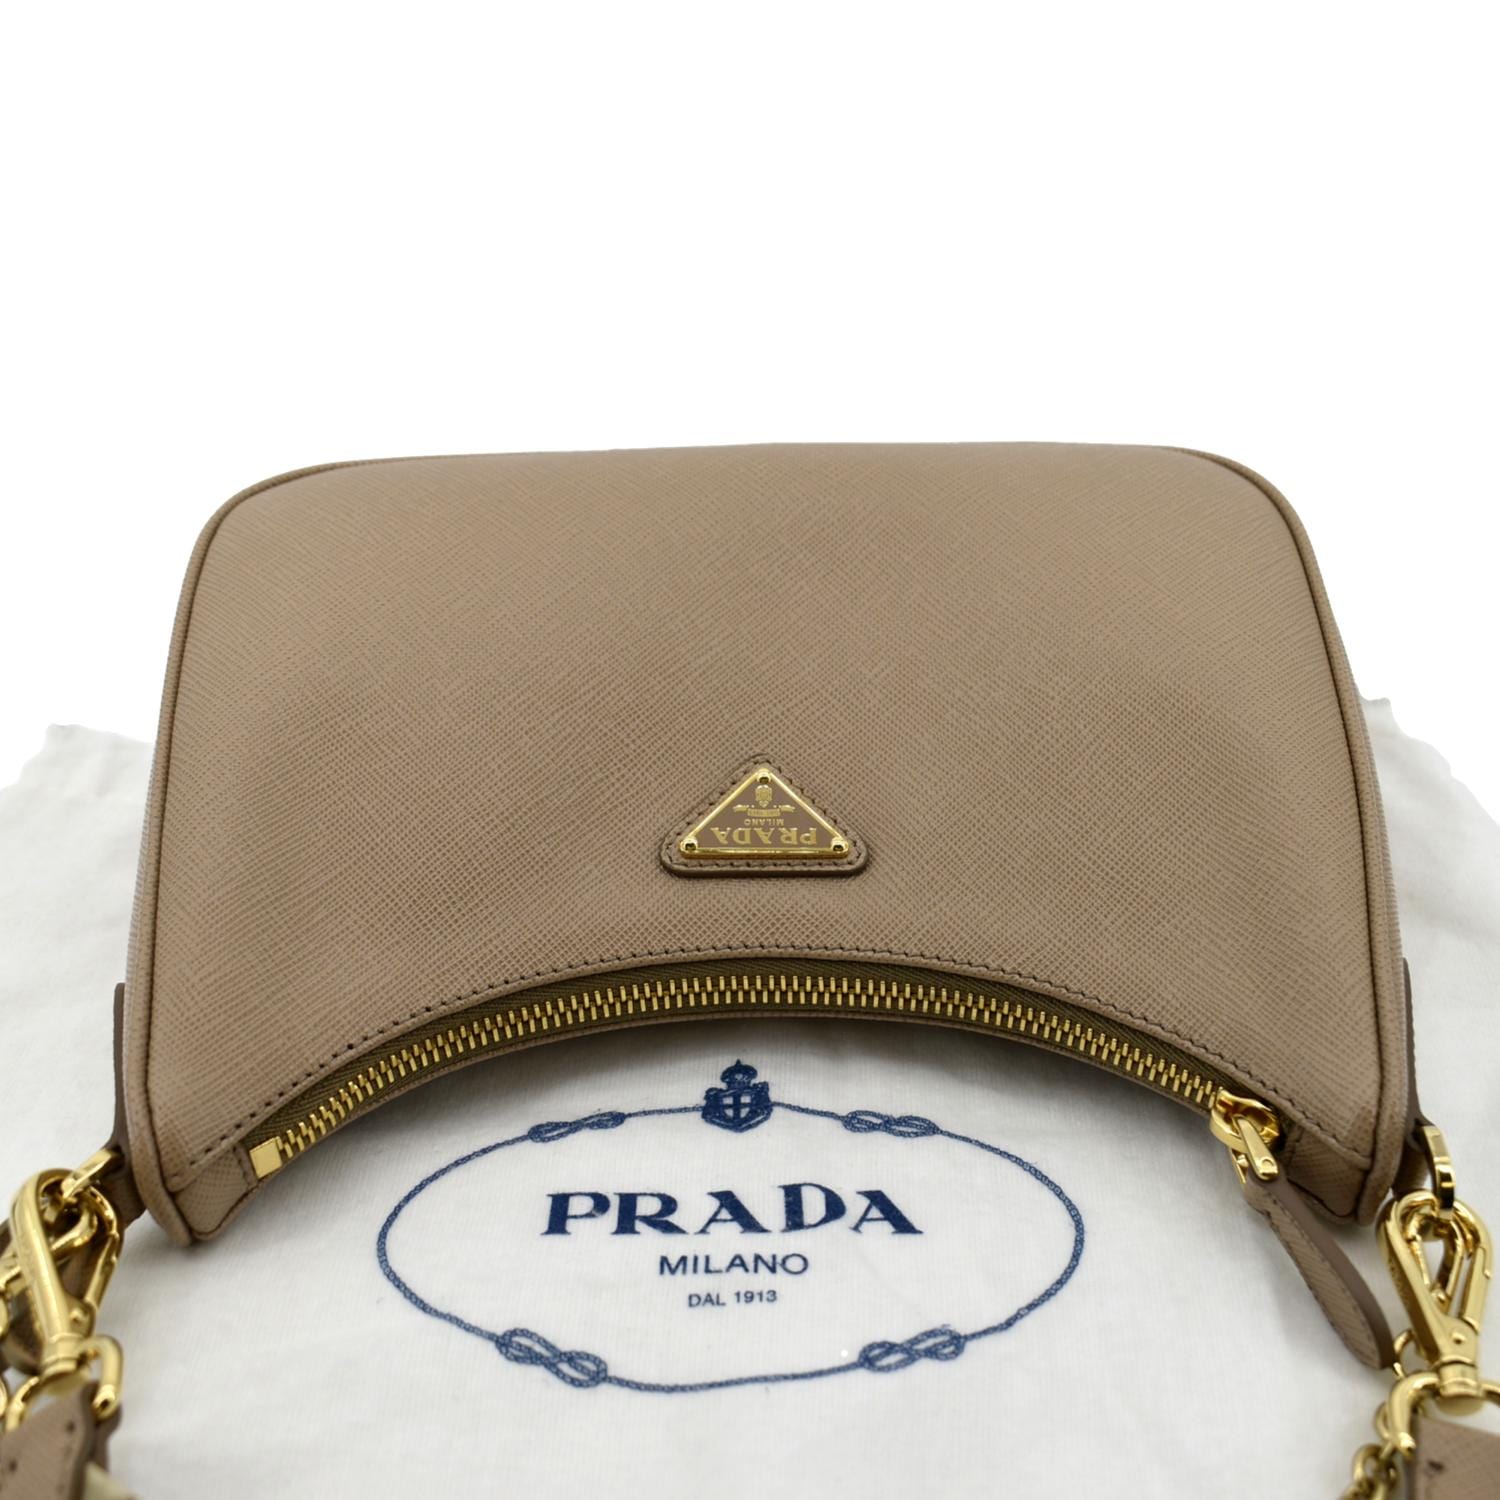 PRADA Re-Edition 2005 Saffiano Leather Shoulder Bag Beige